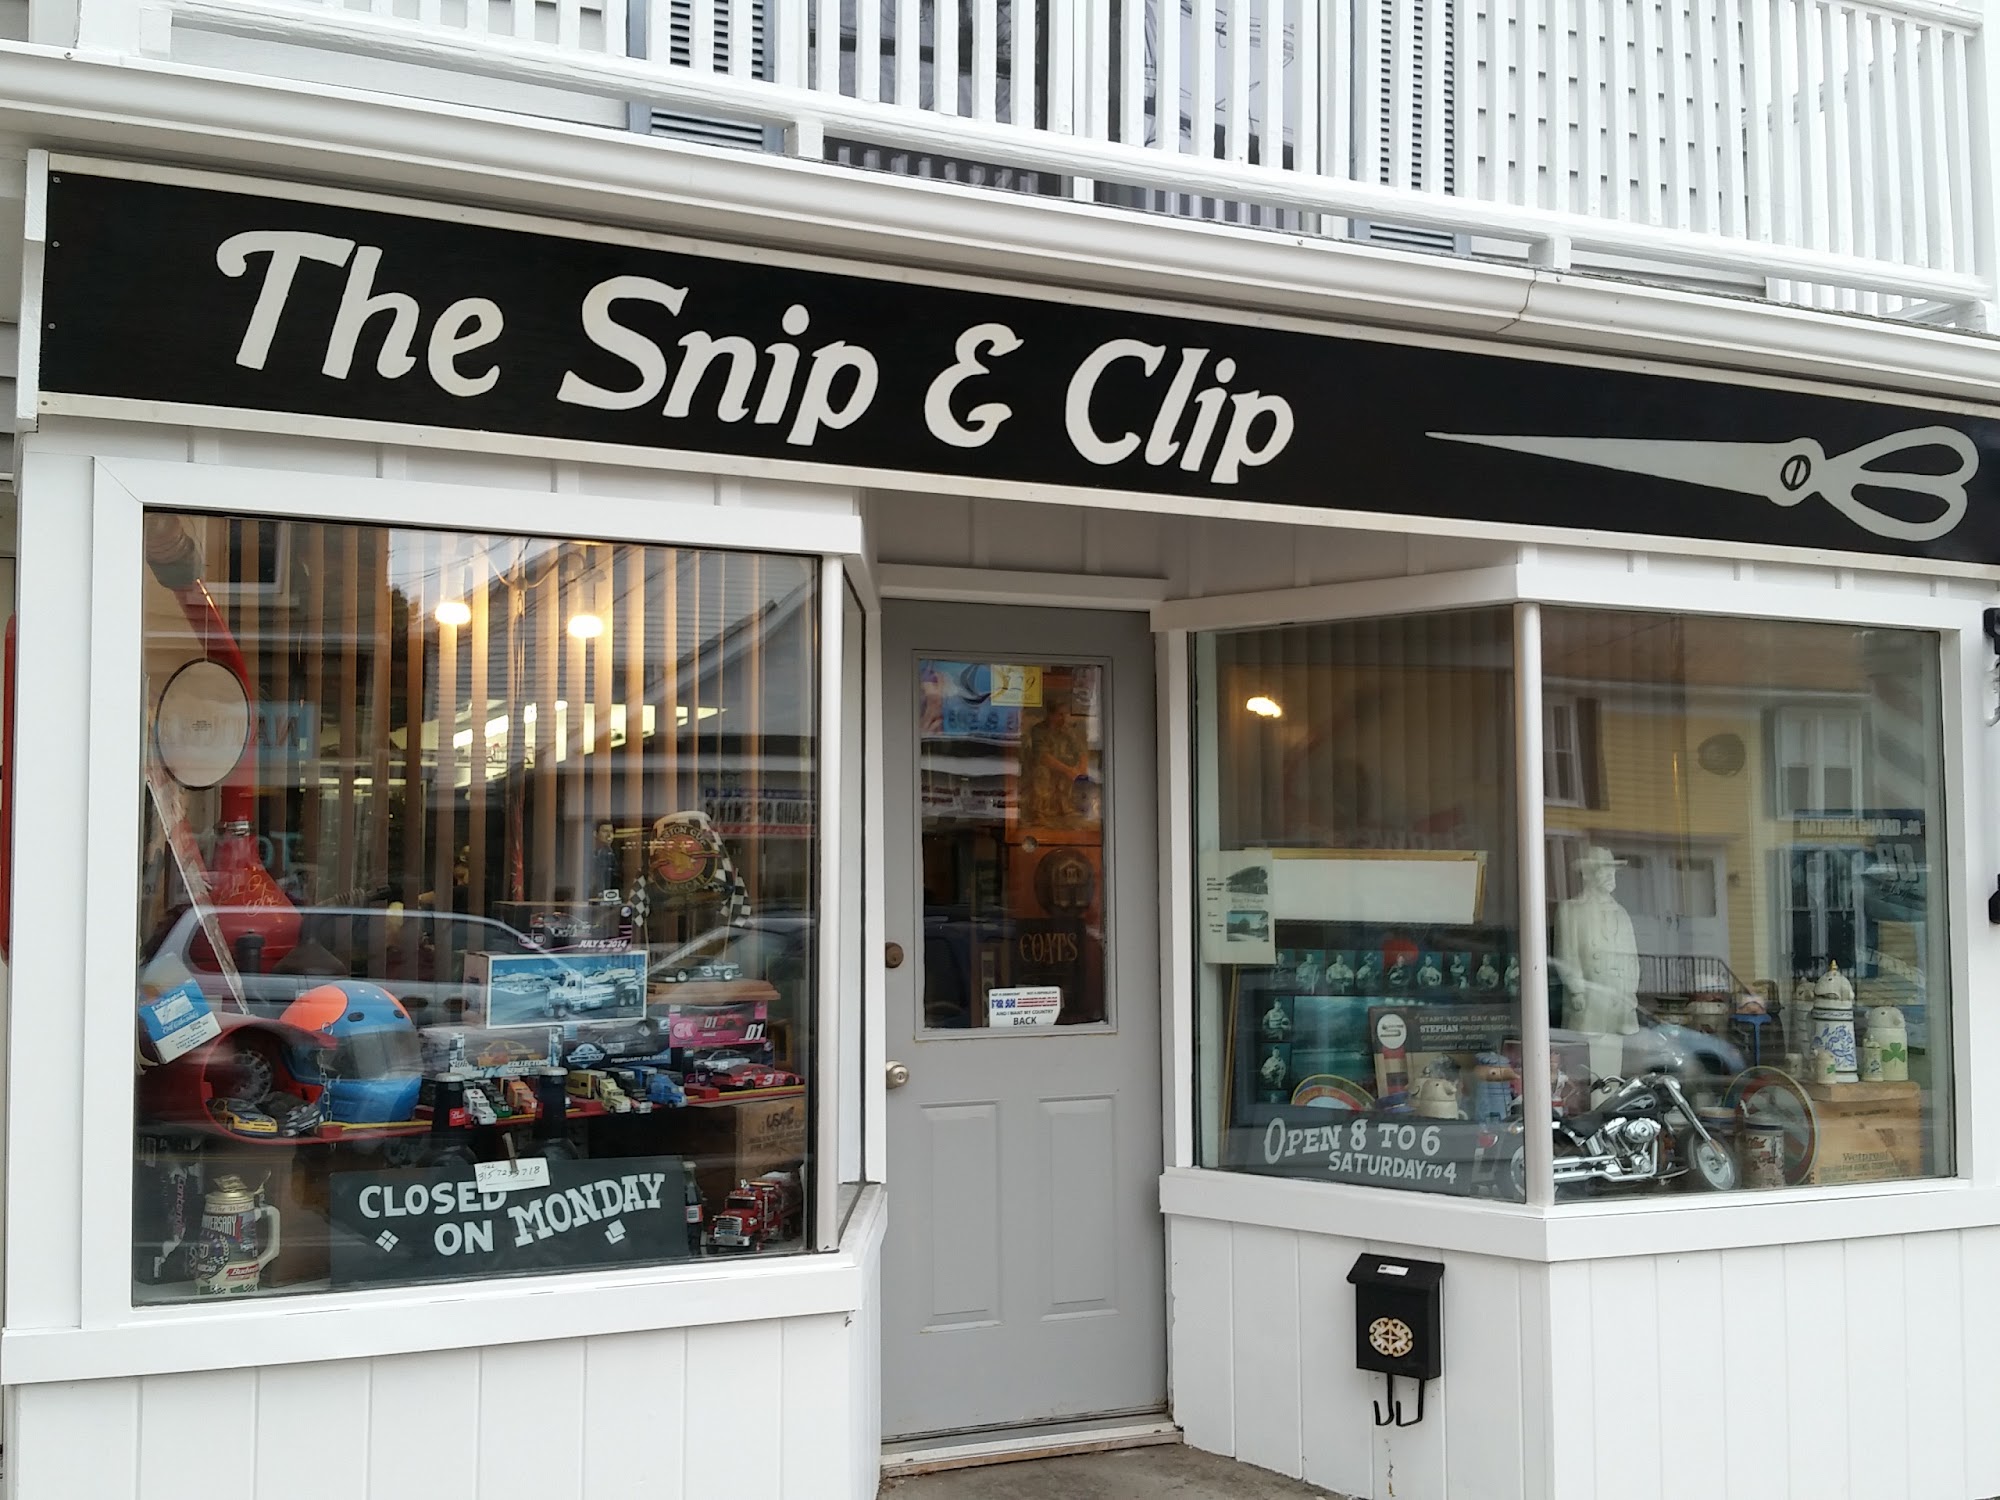 Snip & Clip